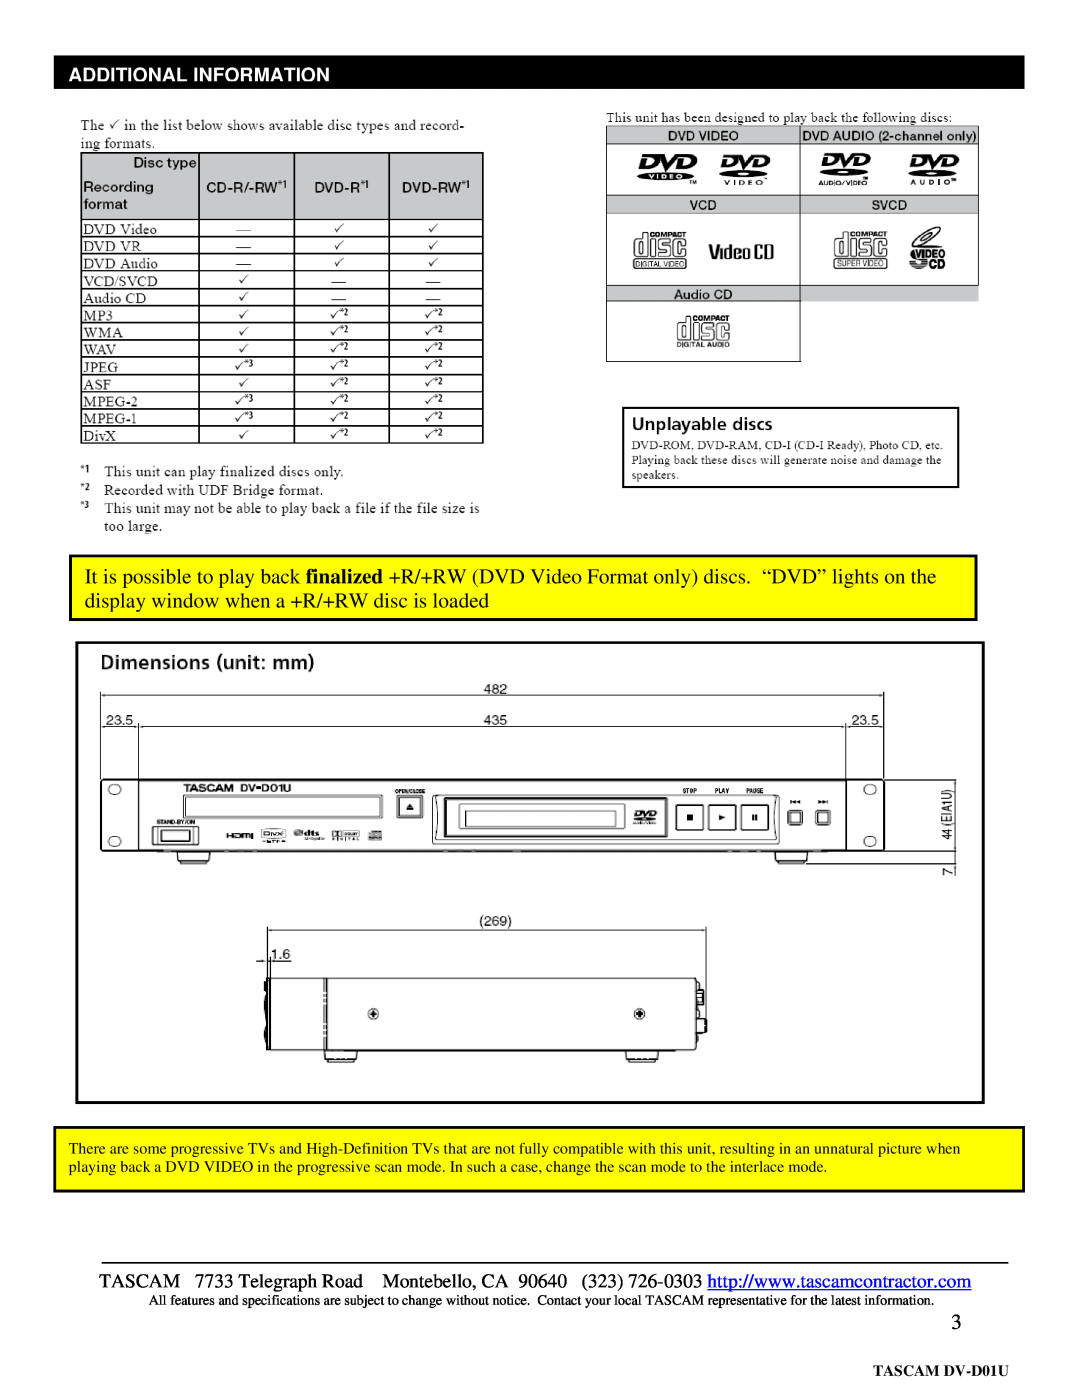 Tascam specifications Additional Information, TASCAM DV-D01U 